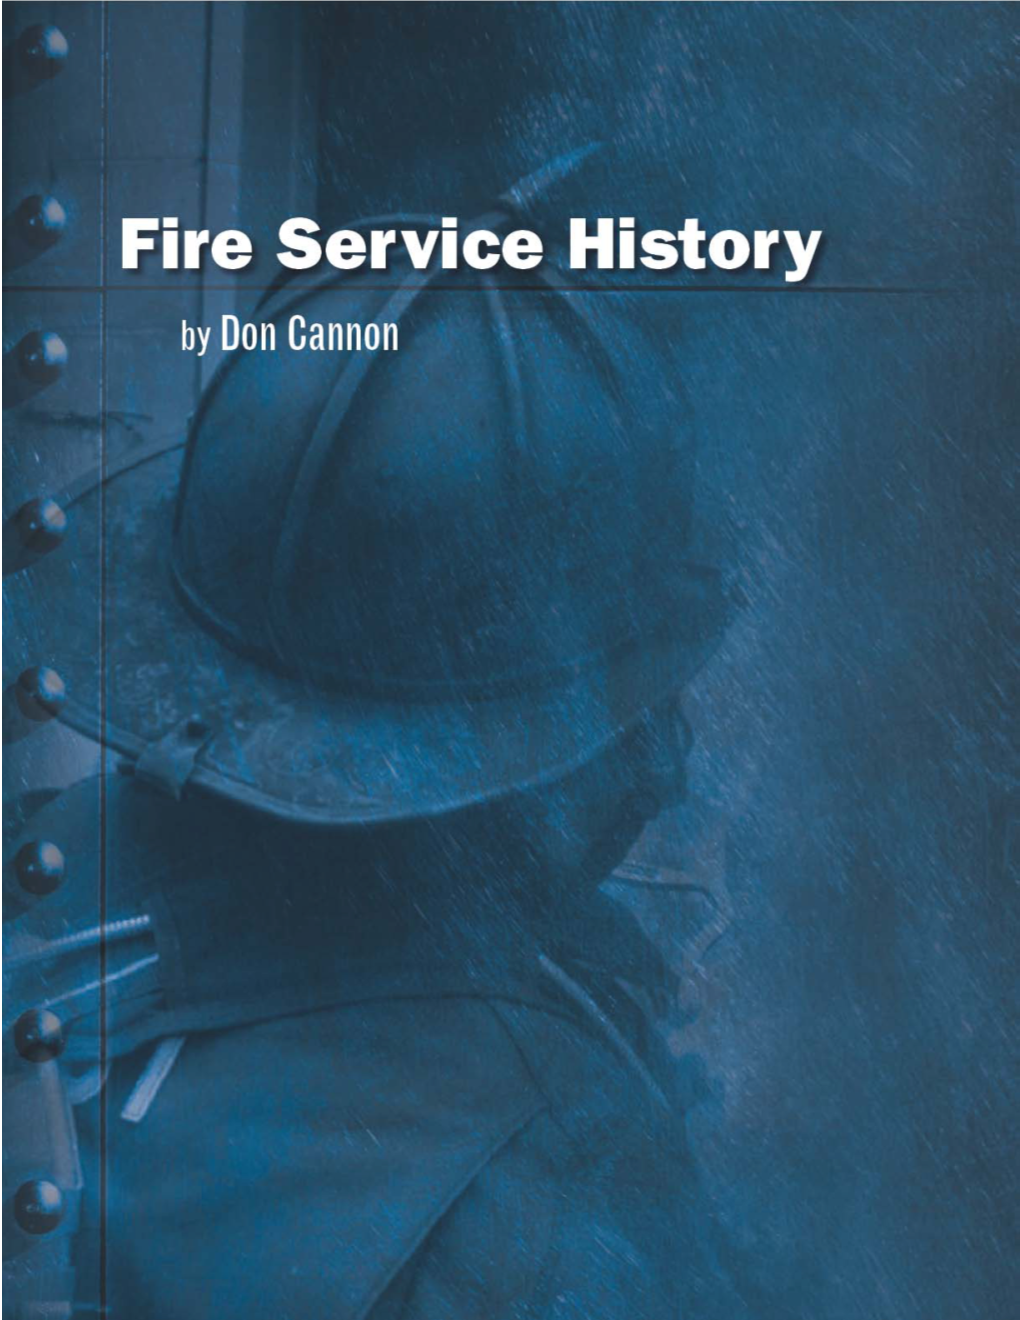 Fire Engineering's Handbook for Firefighter I & II